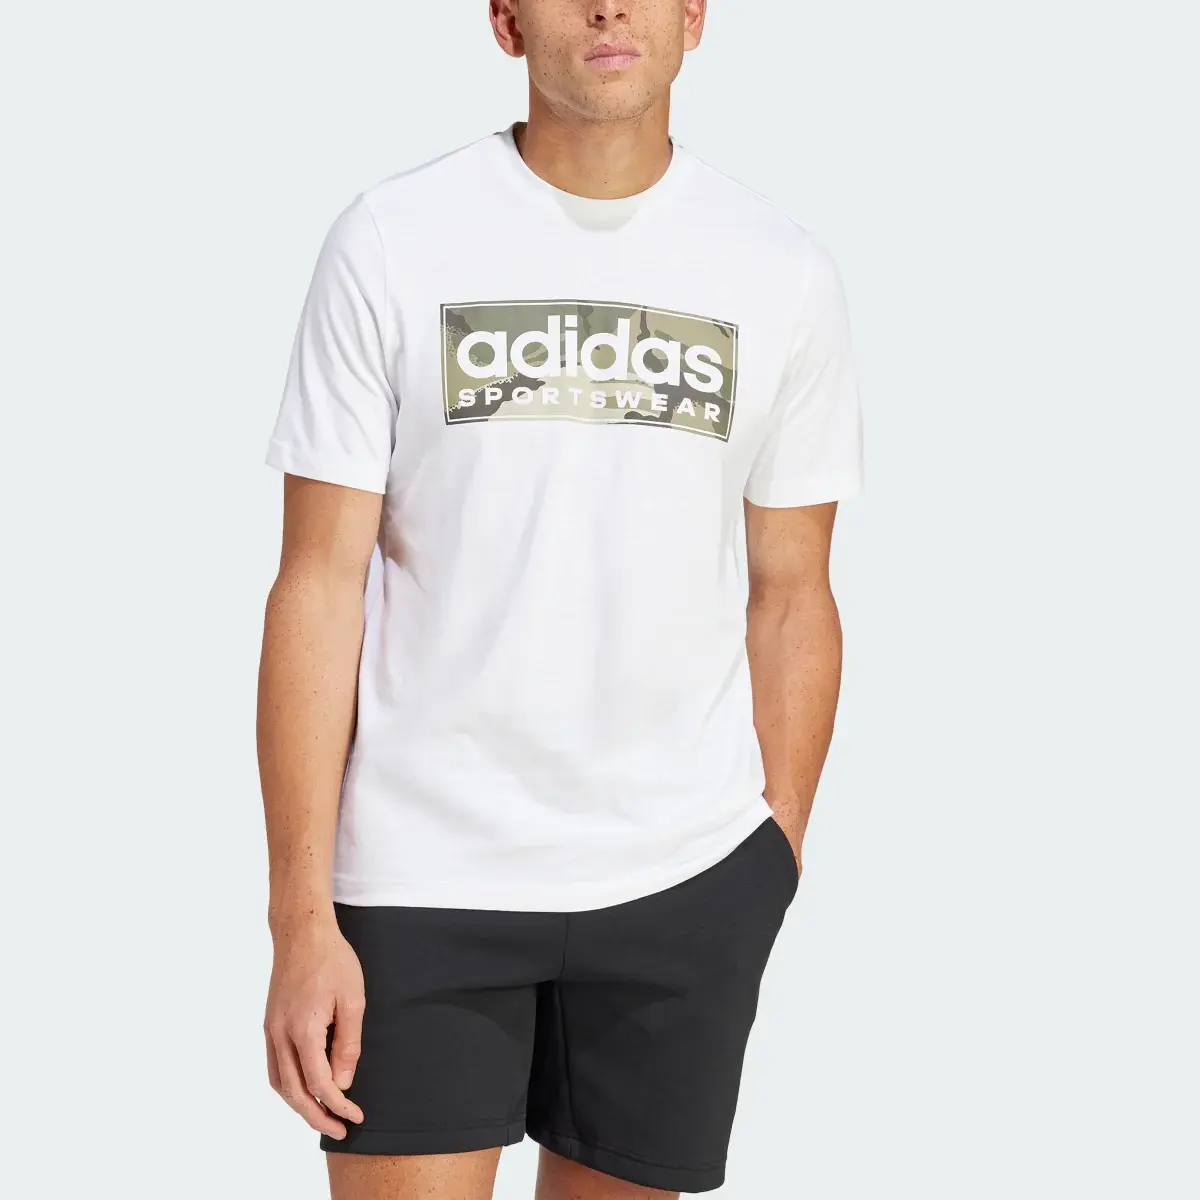 Adidas Camo Linear Graphic T-Shirt. 1